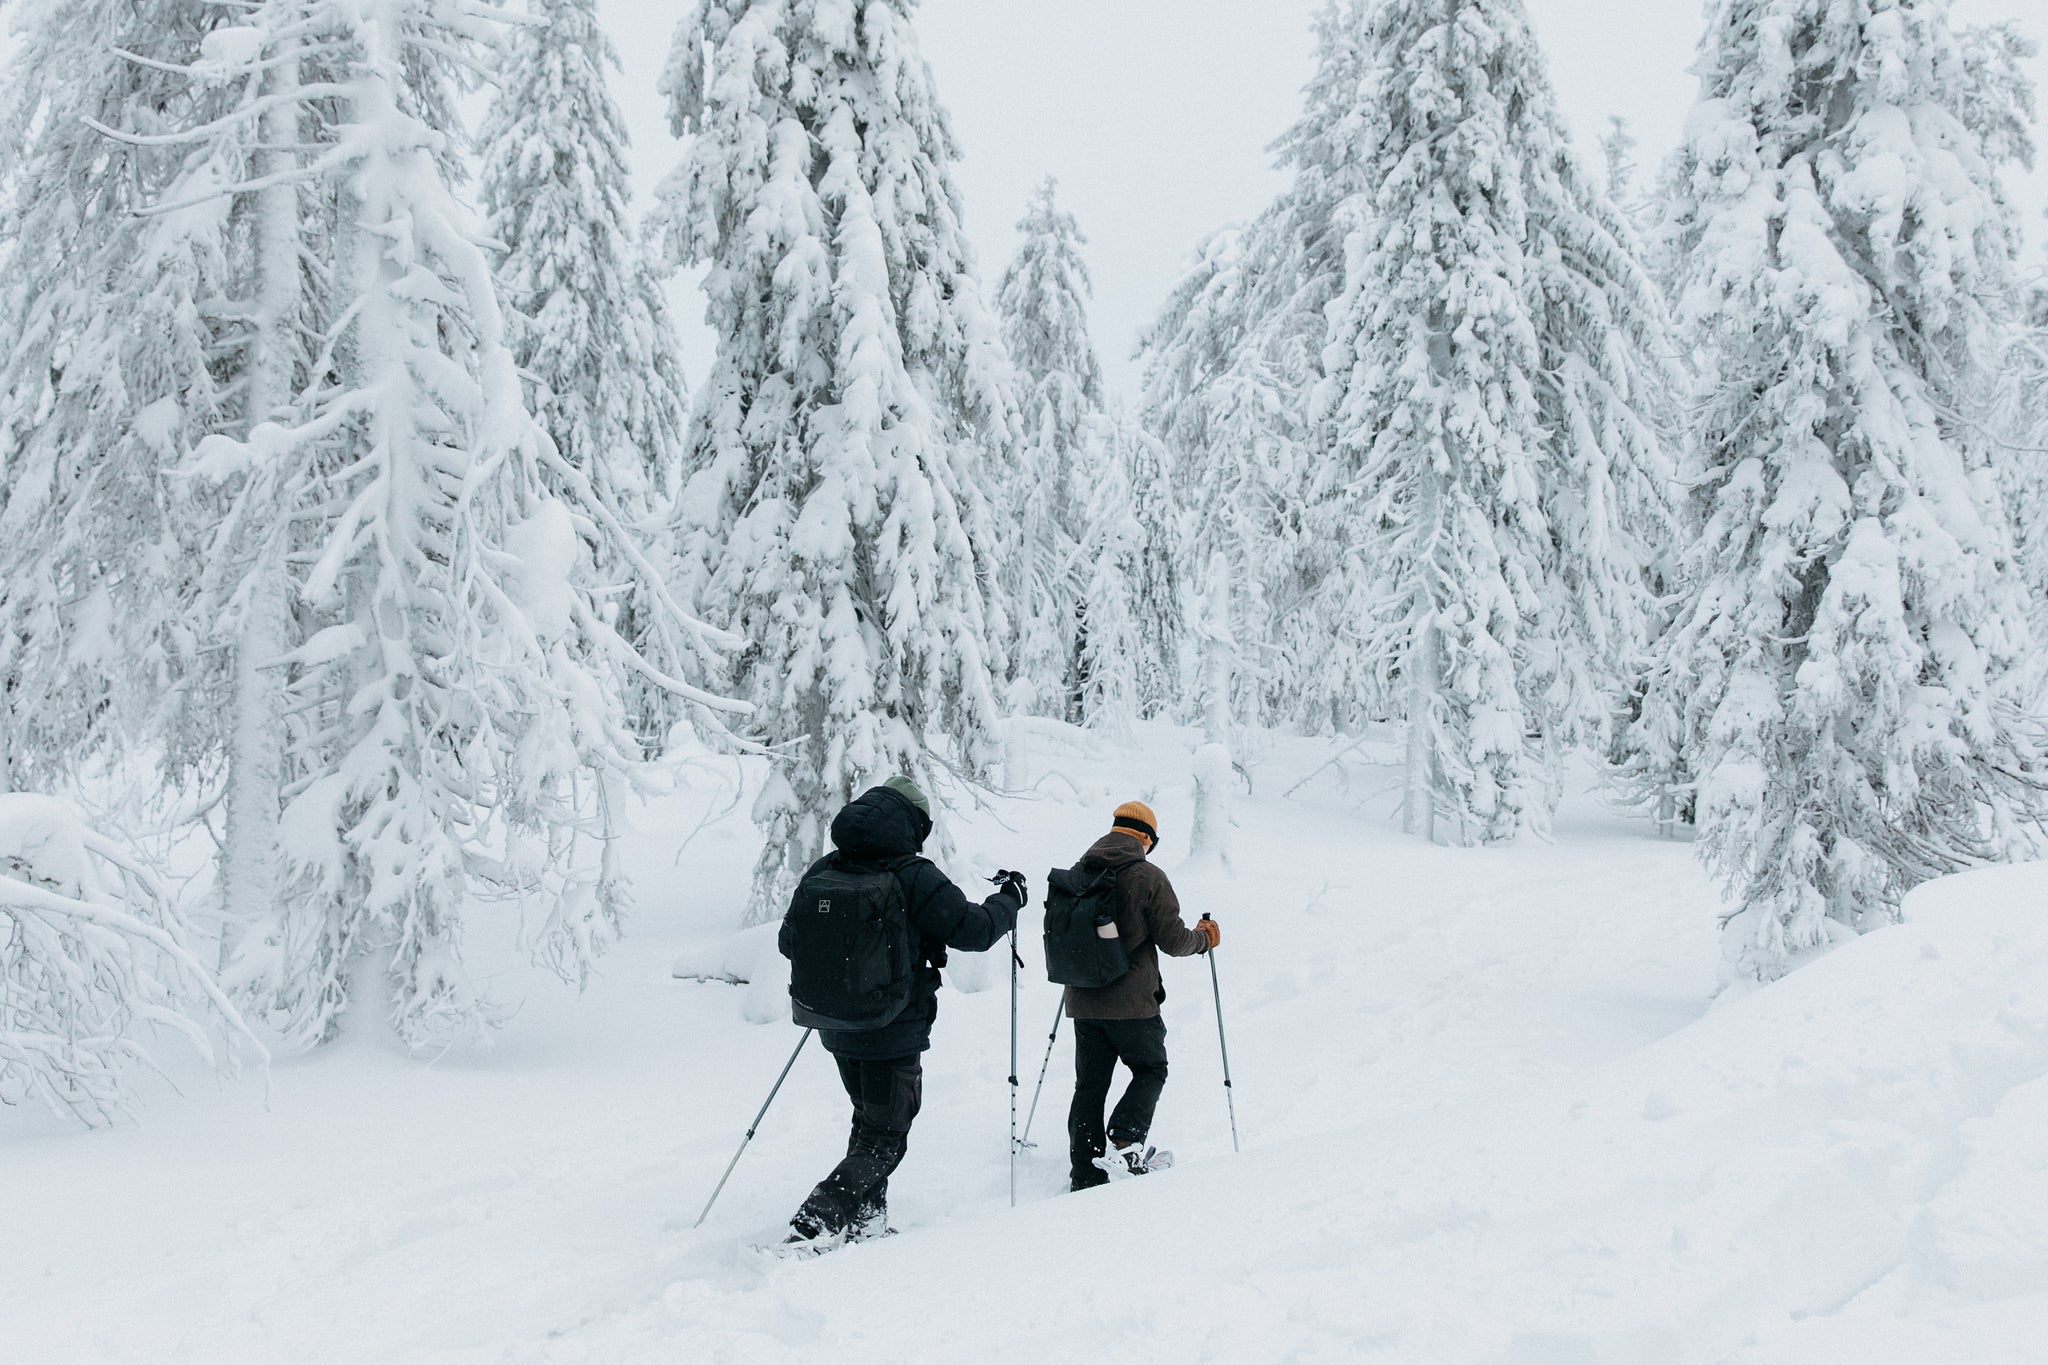 two men walking through the snow wearing skis and black rucksacks and backpacks